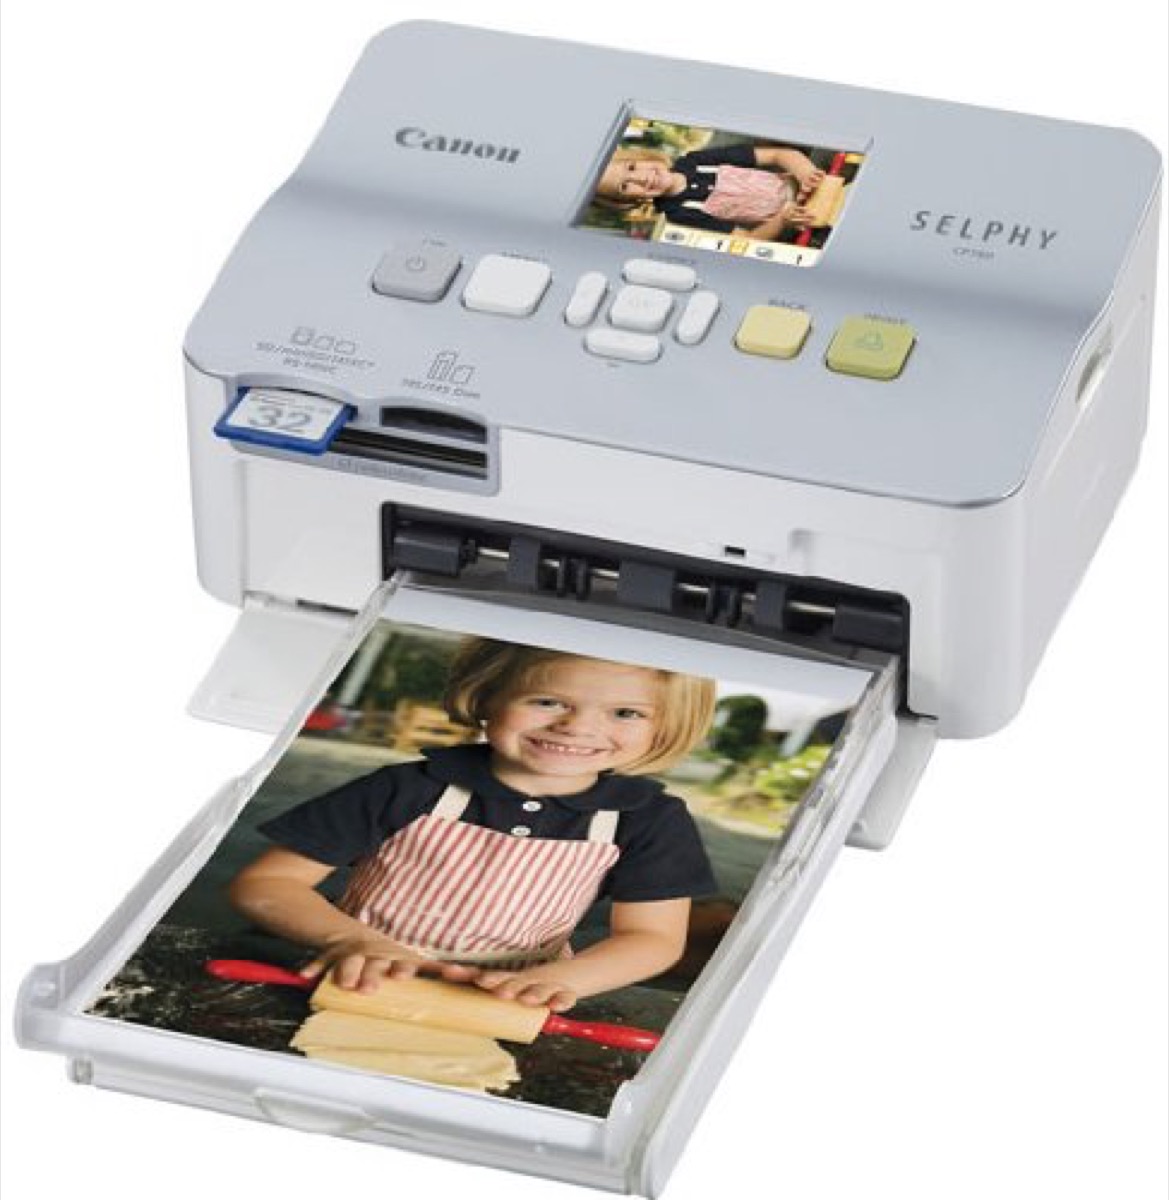 canon compact printer, best teacher gifts